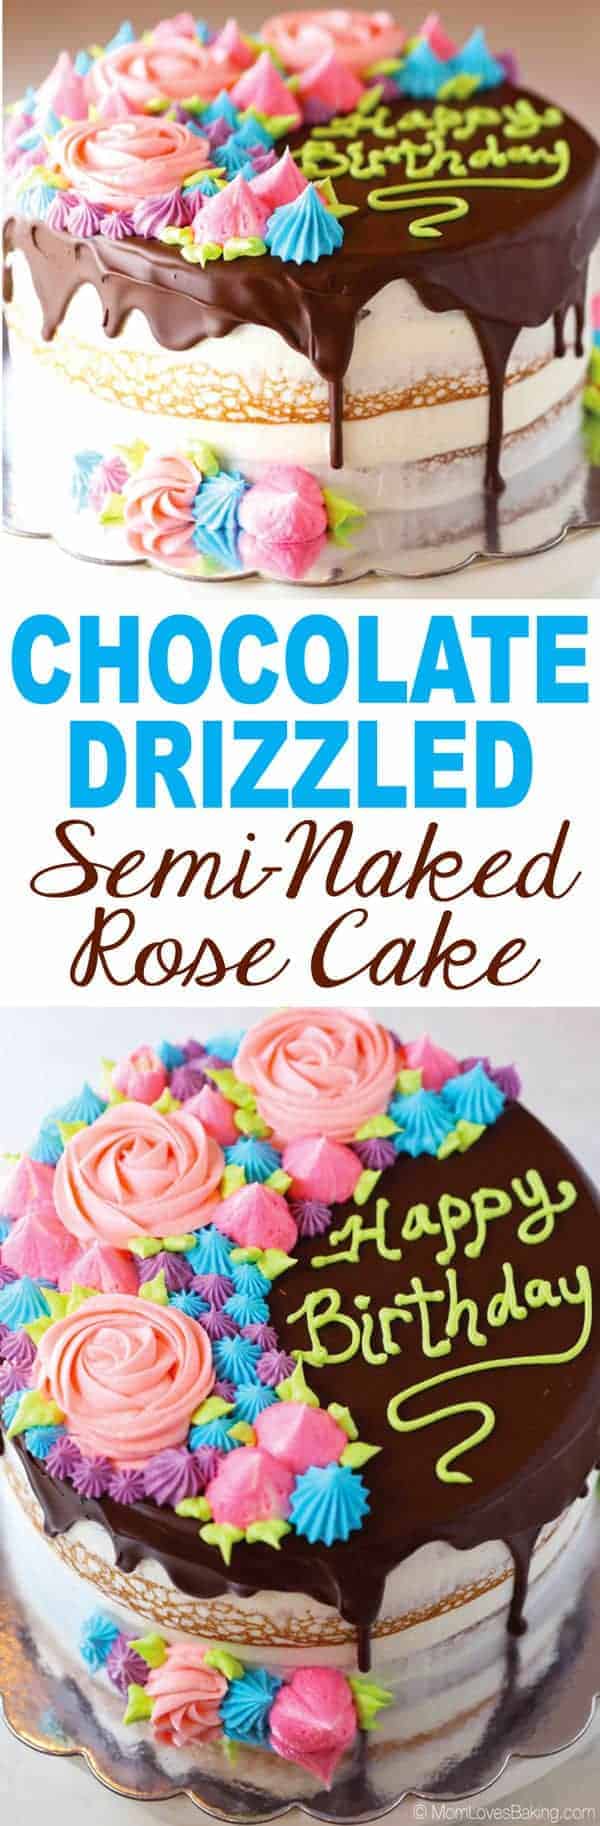 Chocolate Drizzled Semi Naked Rose Cake